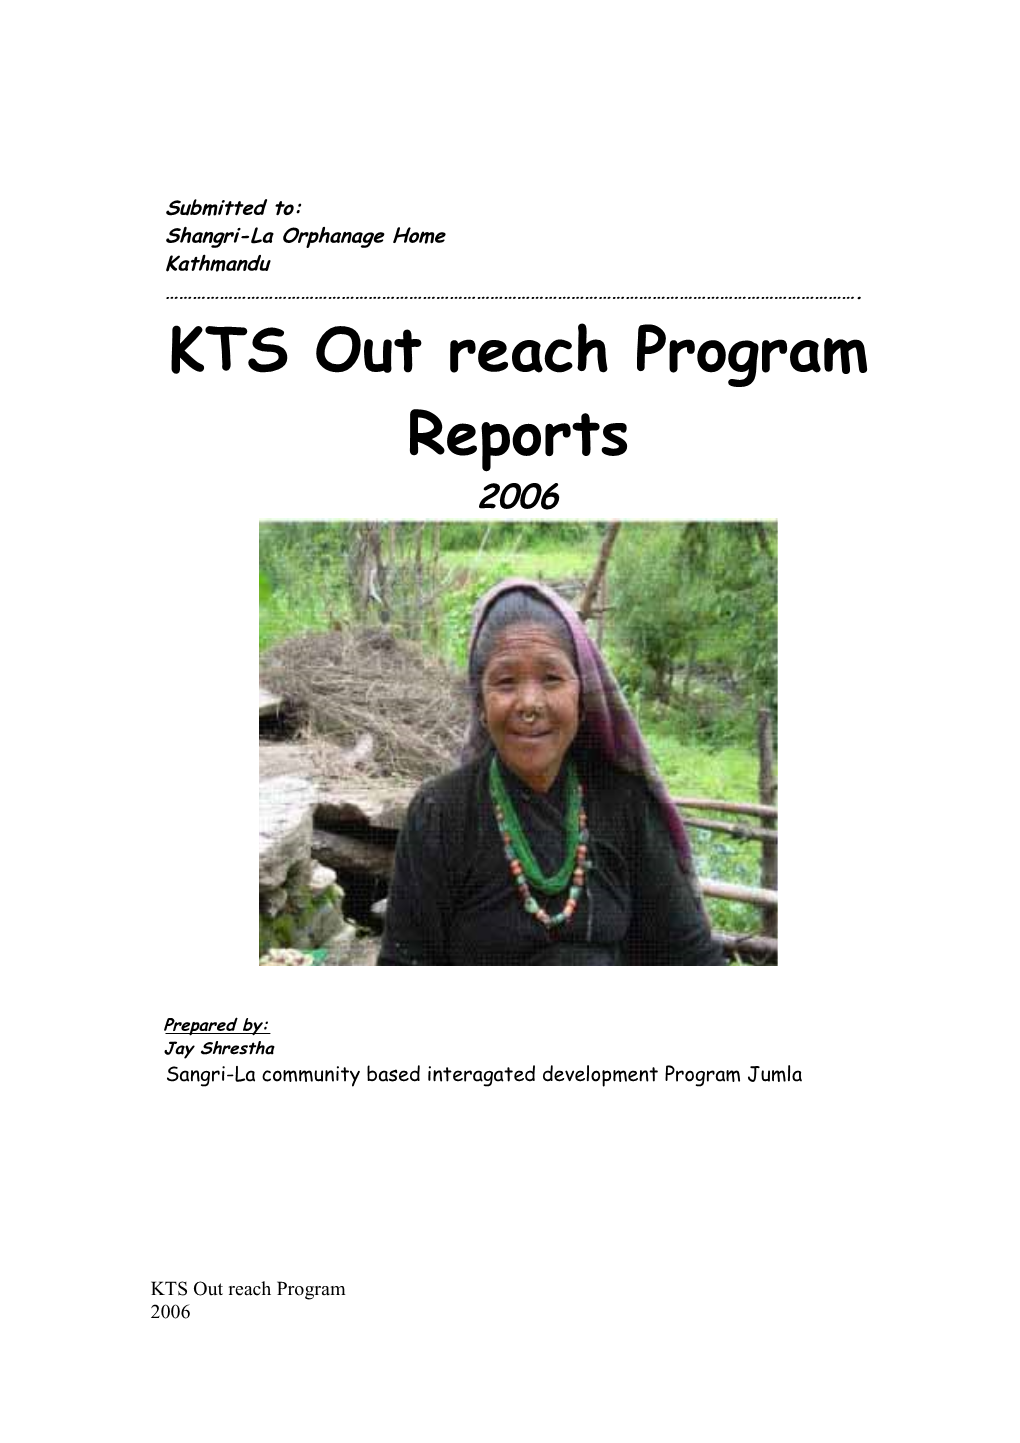 KTS Outreach Program Reports